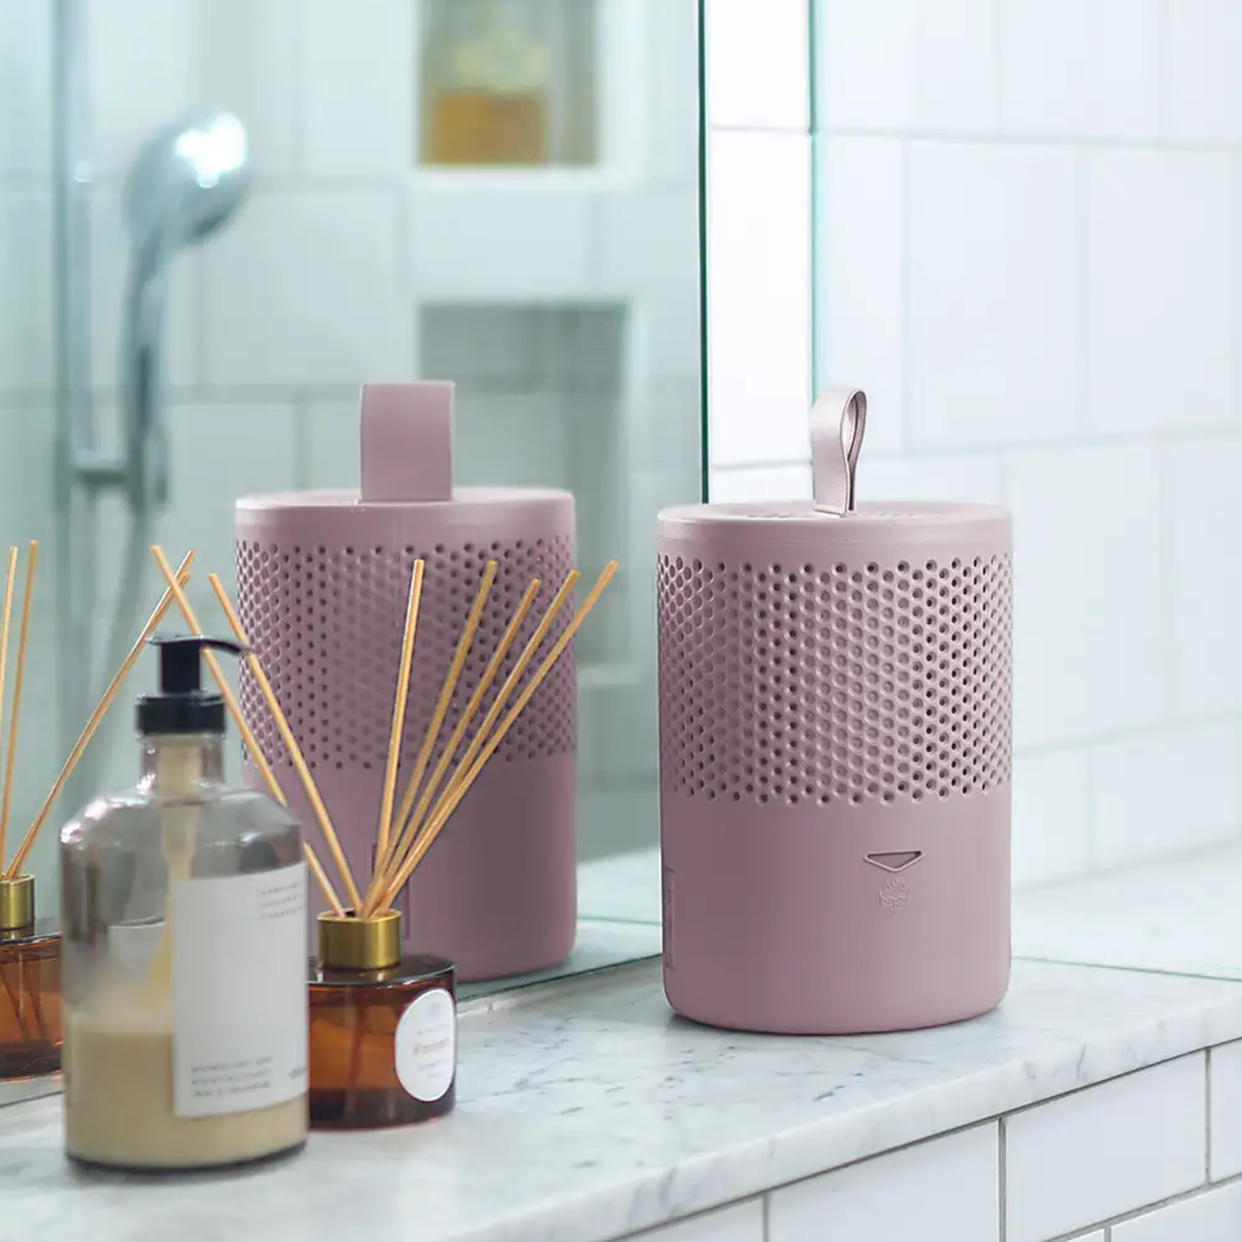  Pink Absodry dehumidifier on bathroom shelf. 